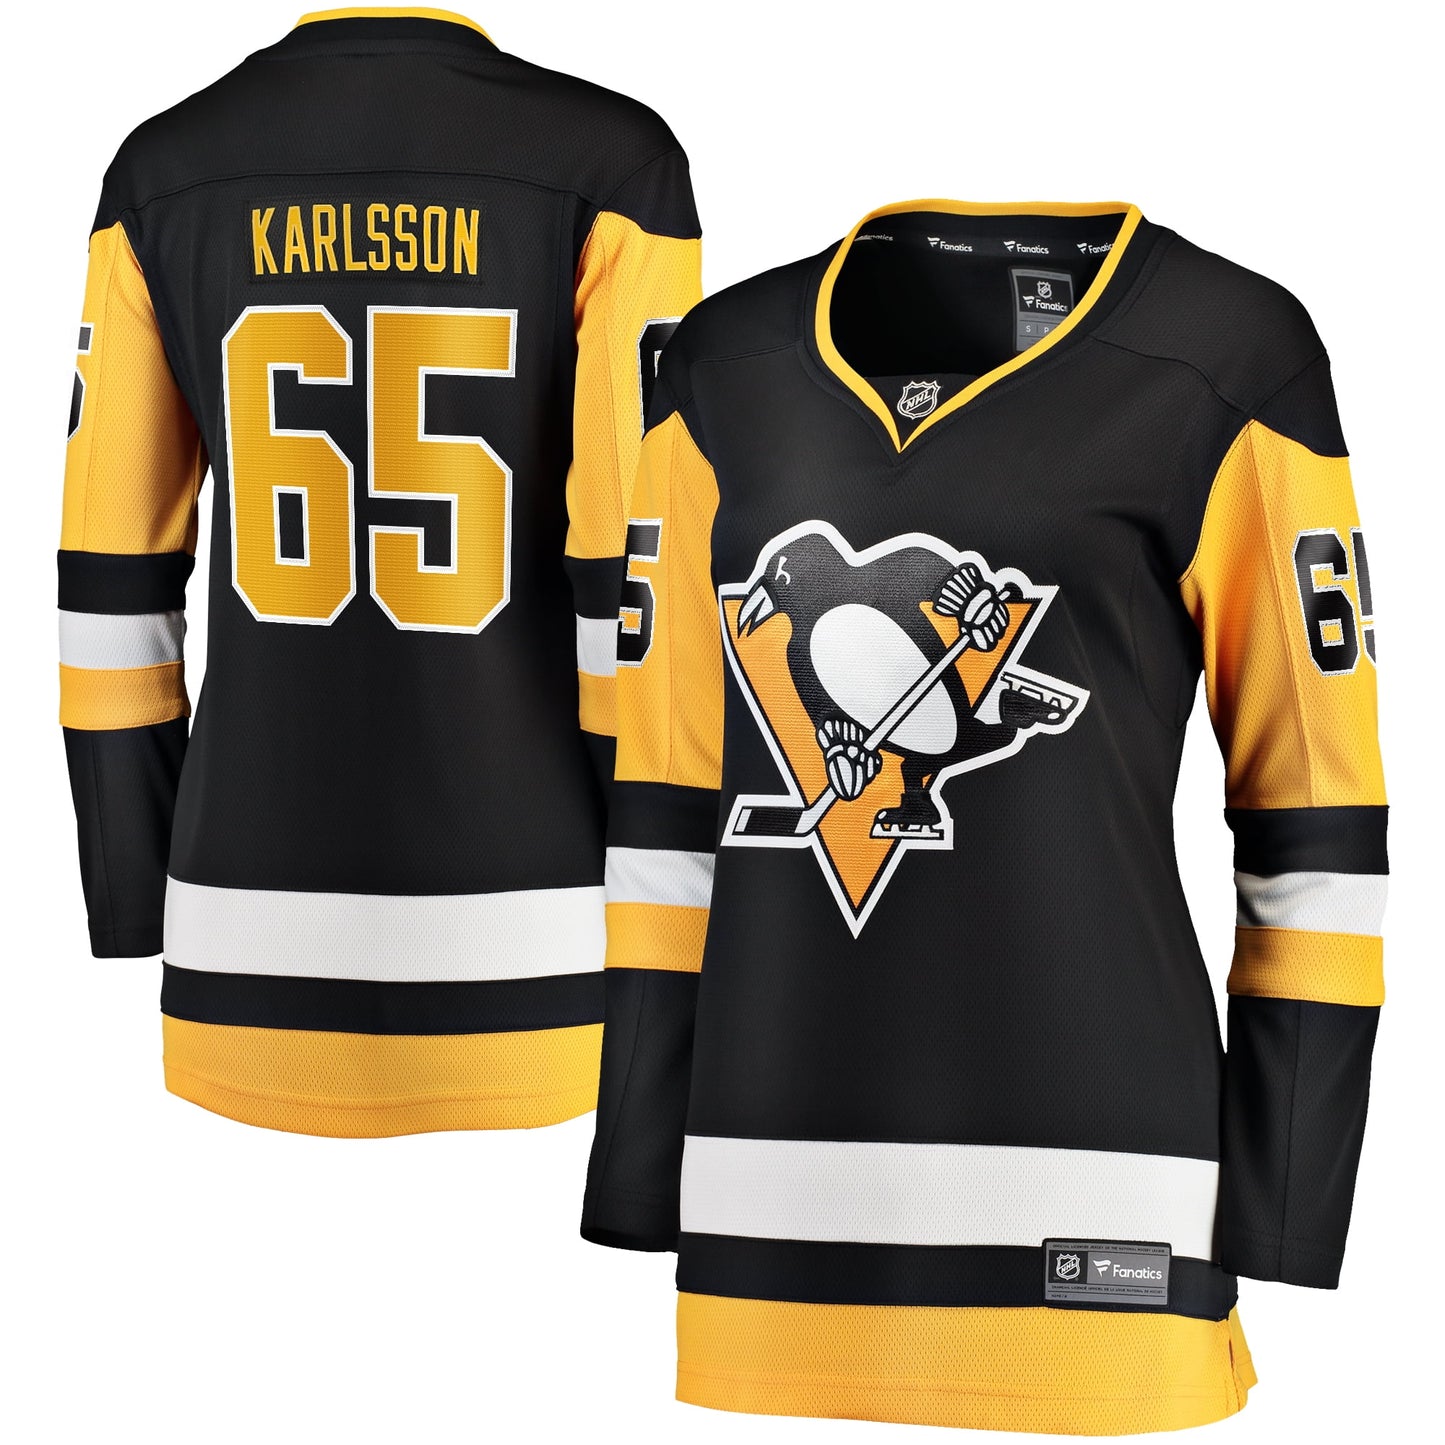 Women's Fanatics Branded Erik Karlsson Black Pittsburgh Penguins Home Breakaway Jersey